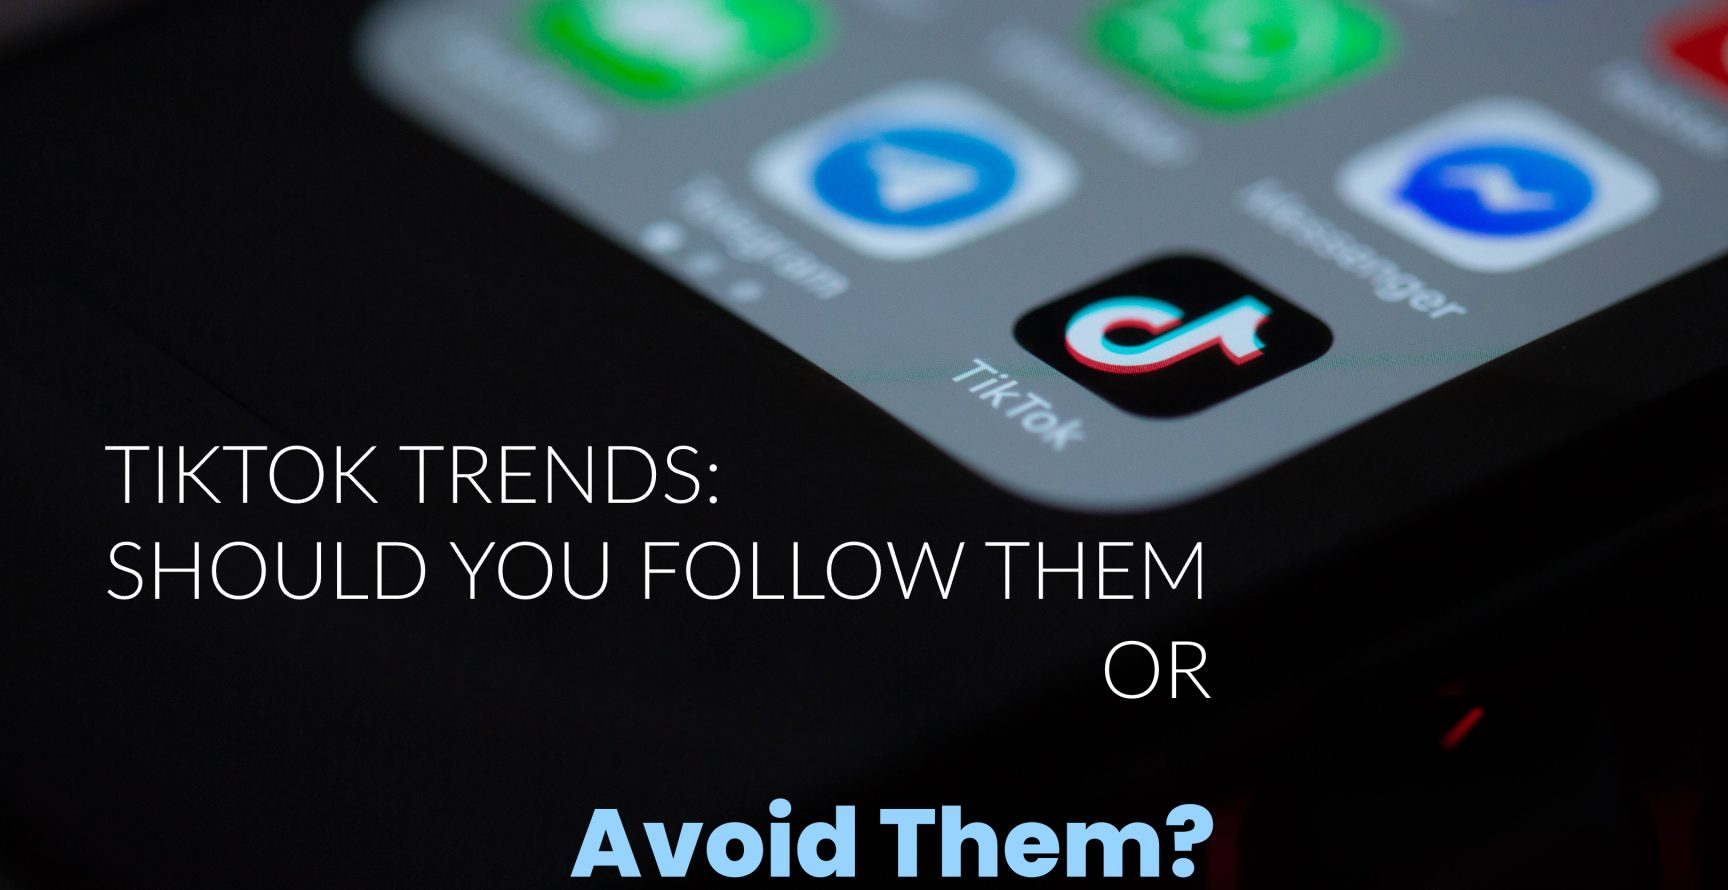 TikTok-Trends-Should-You-Follow-Them-Or-Avoid-Them-Phone-with-TikTok-App-Icon